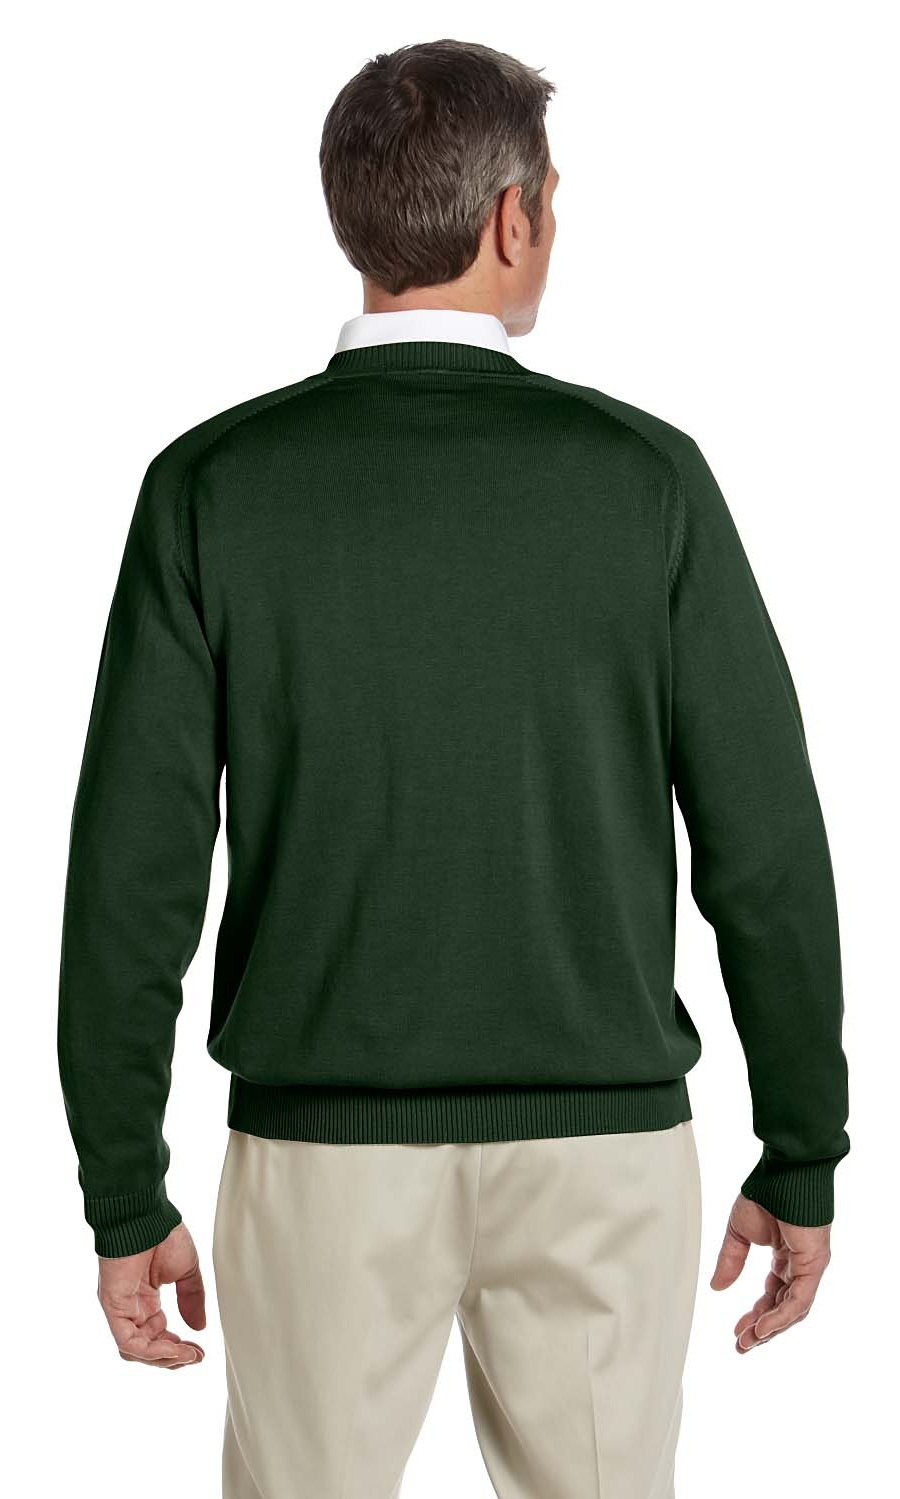 Devon & Jones Men's V-Neck Sweater - image 3 of 3